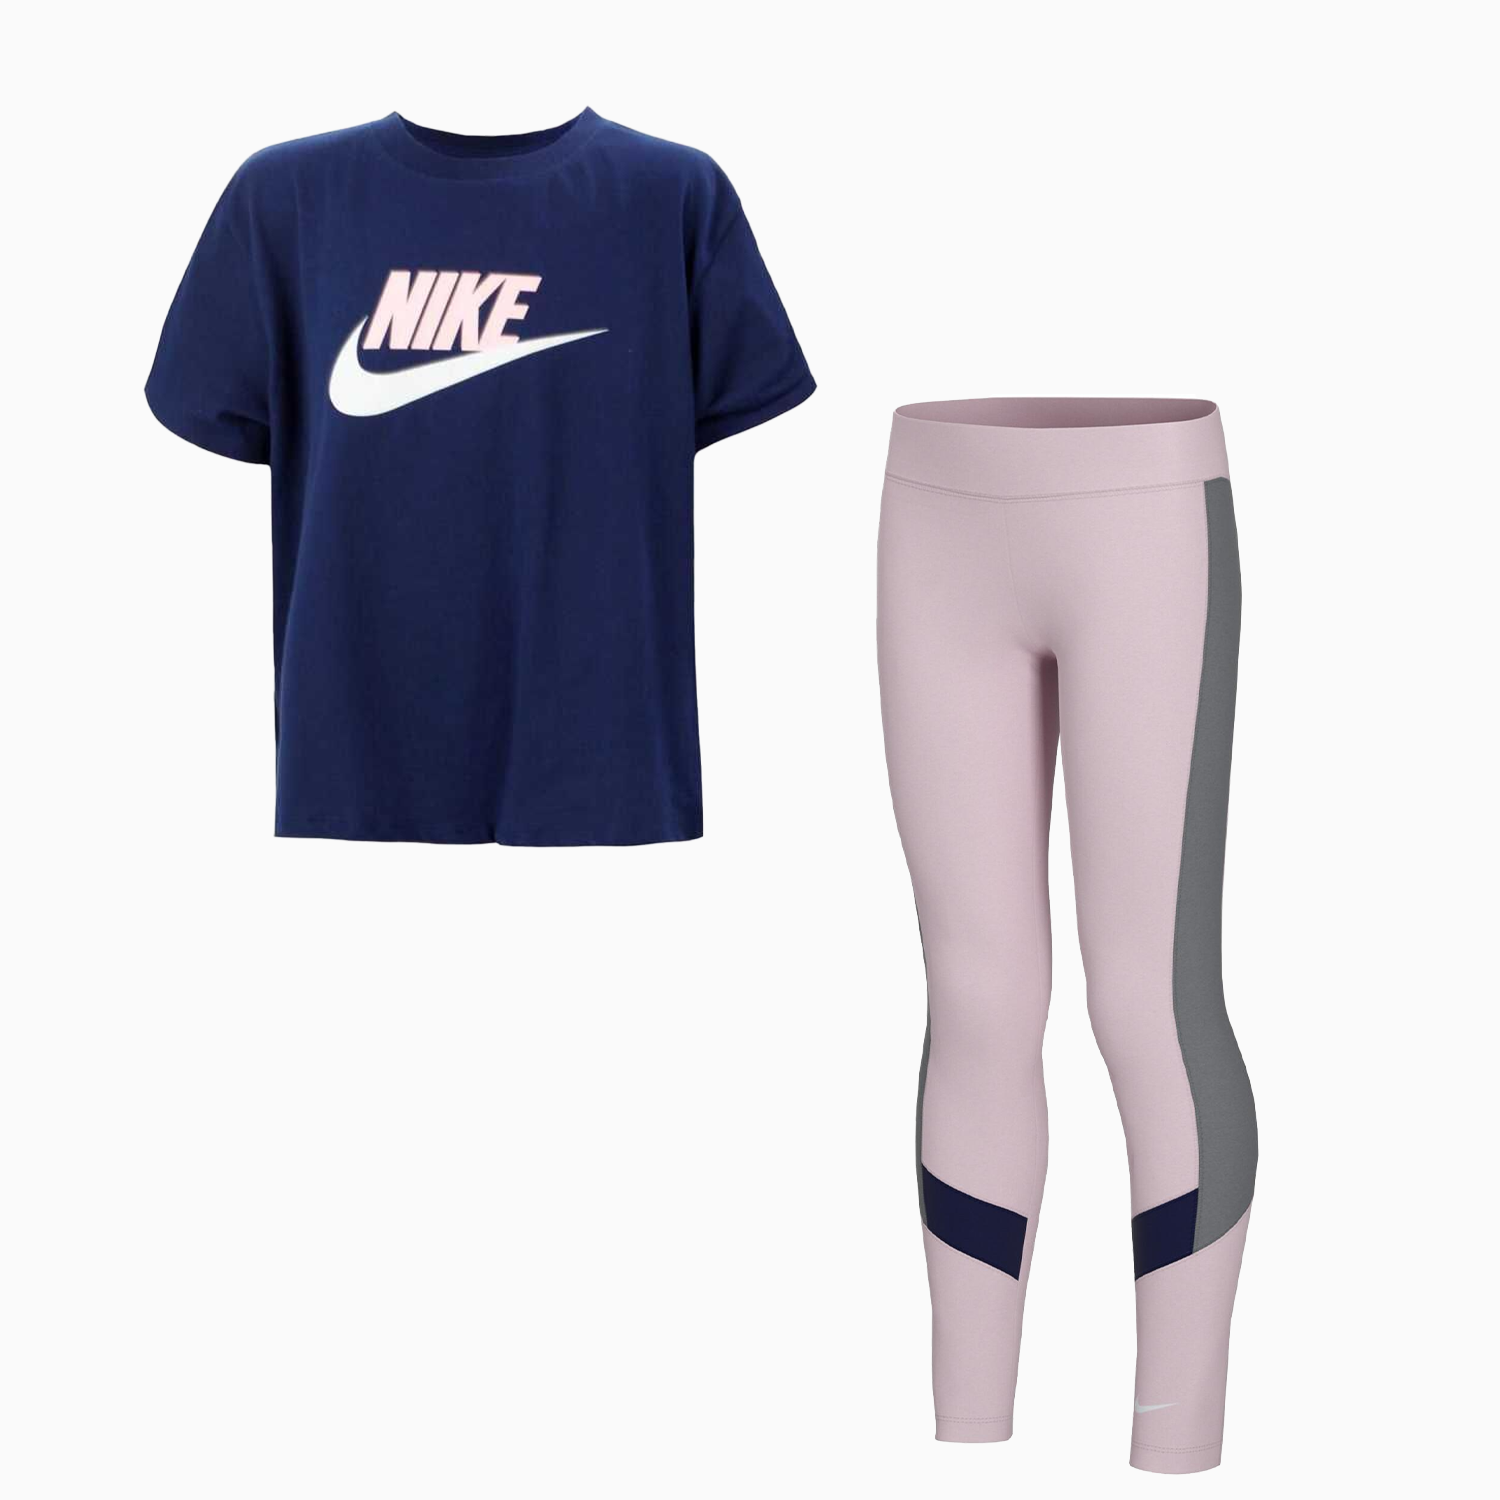 nike-kids-sportswear-dry-fit-outfit-da6925-410-dd8015-663